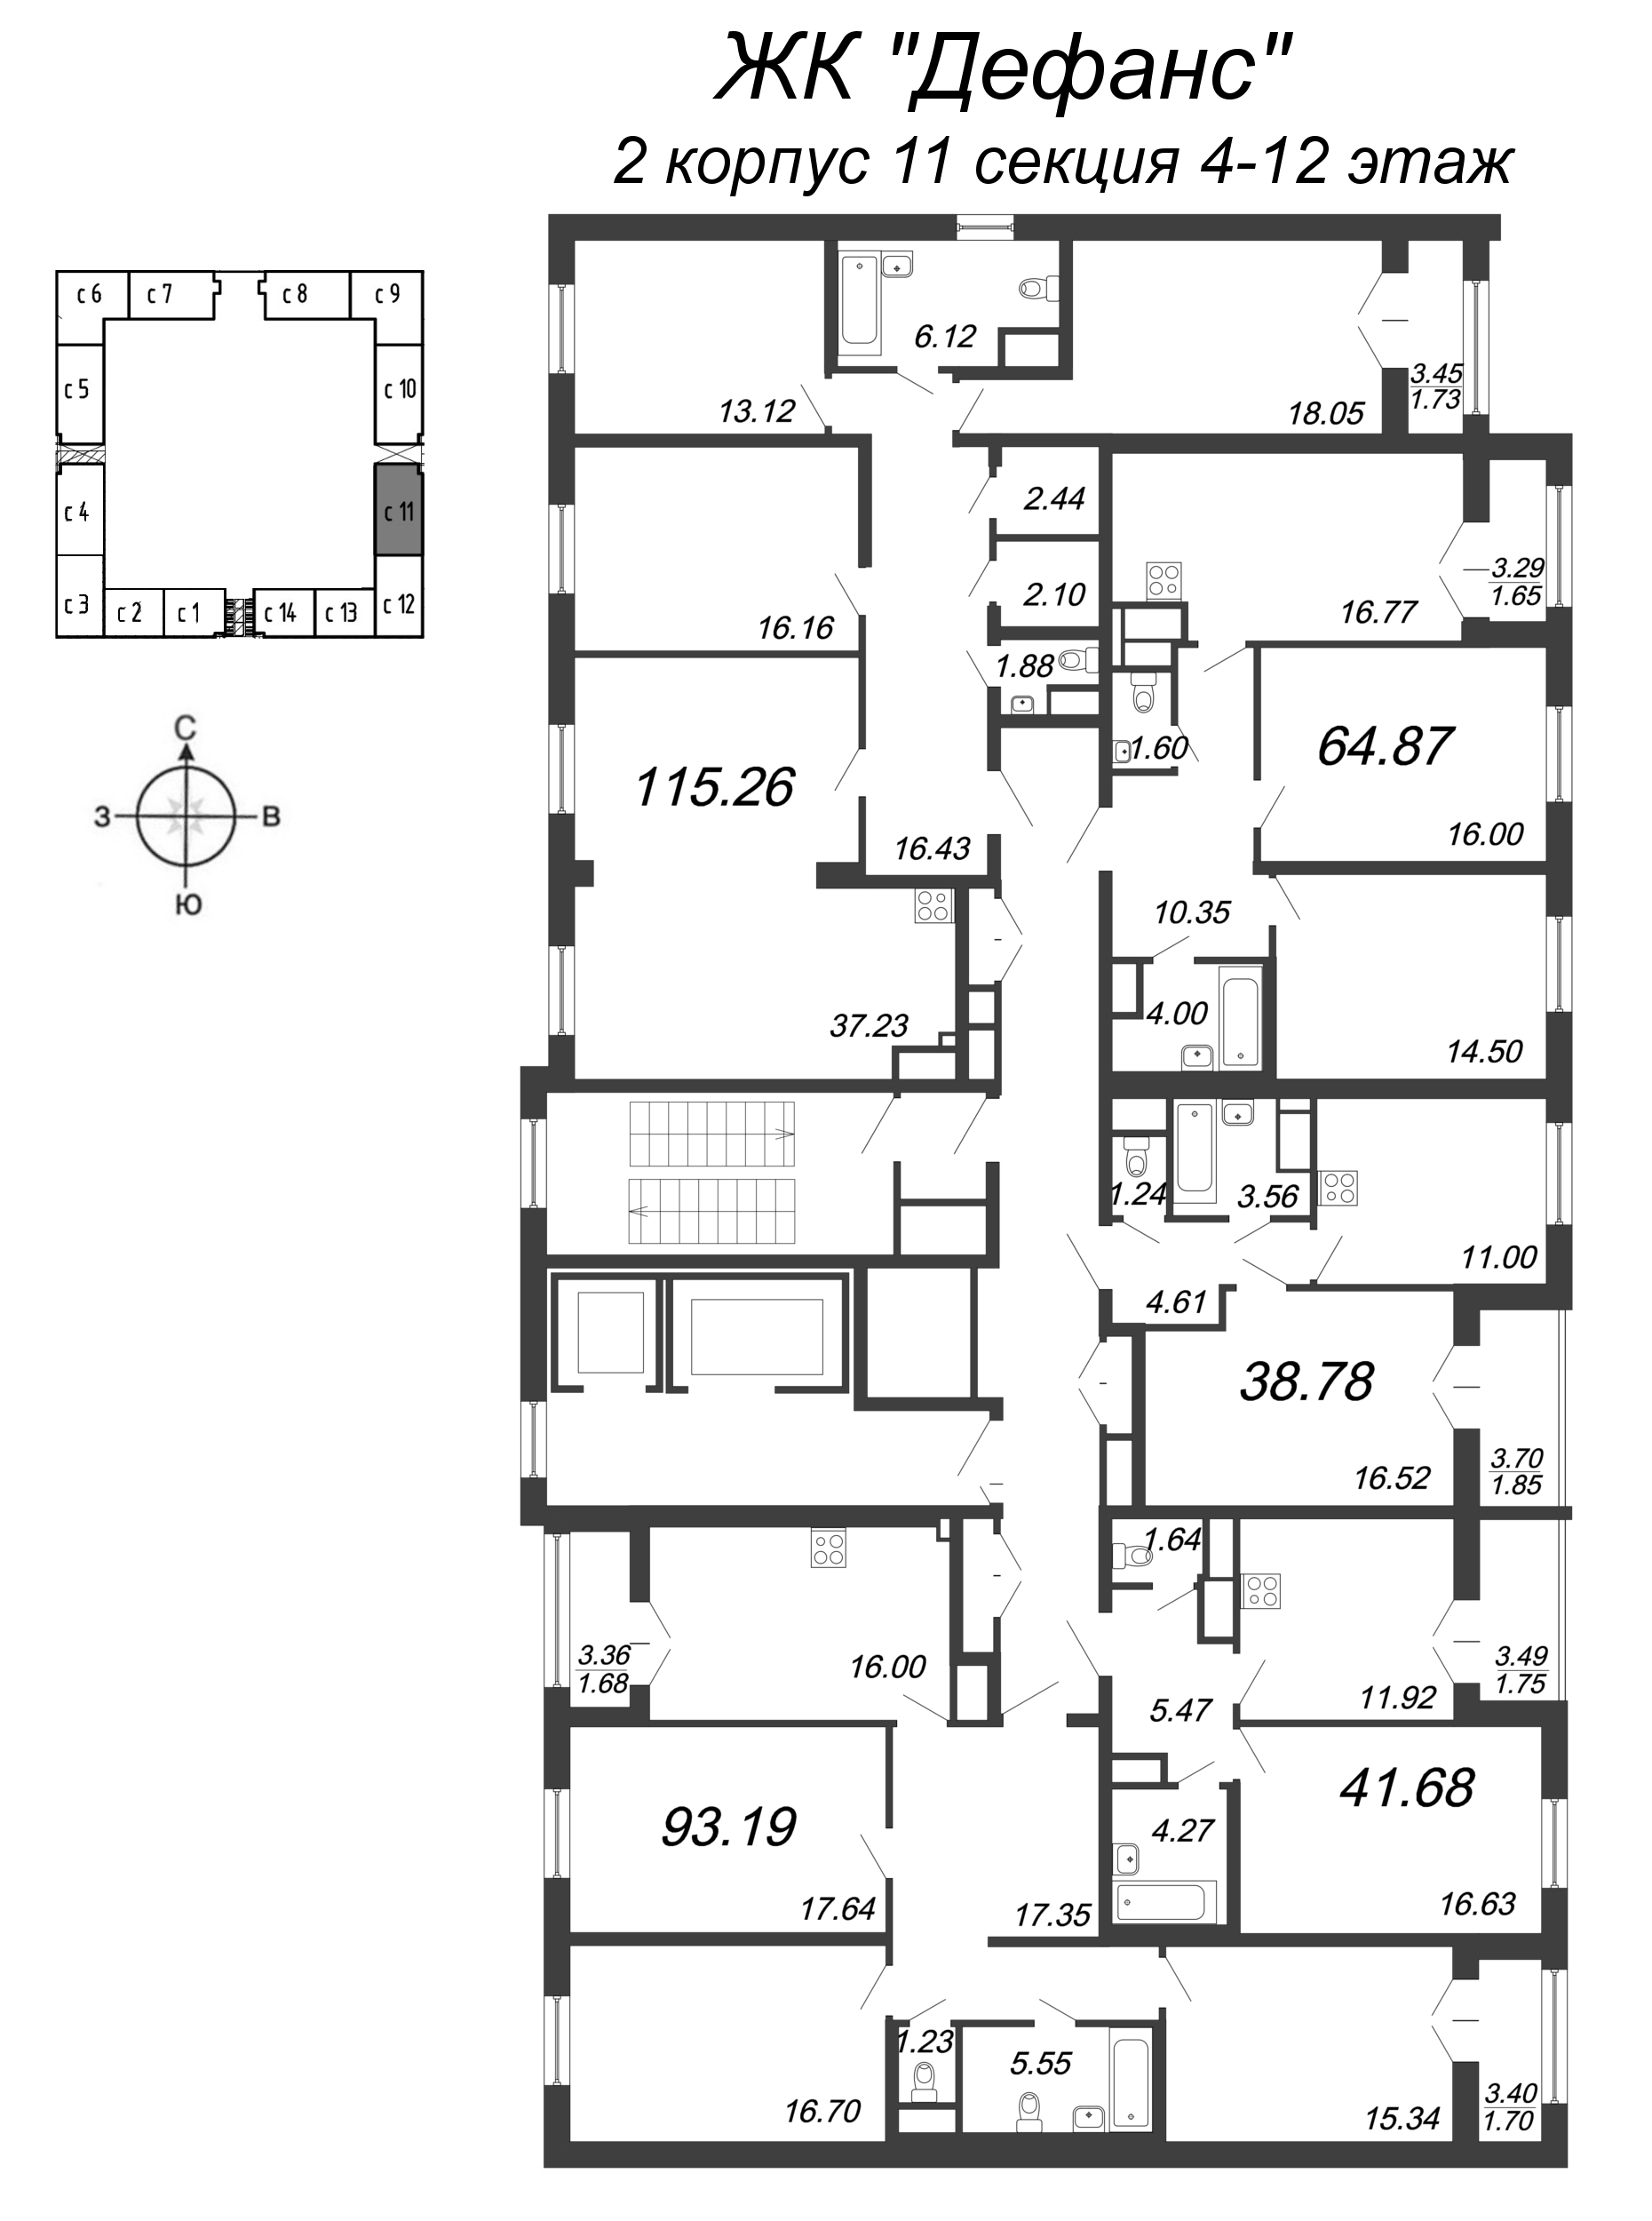 3-комнатная (Евро) квартира, 64.87 м² - планировка этажа